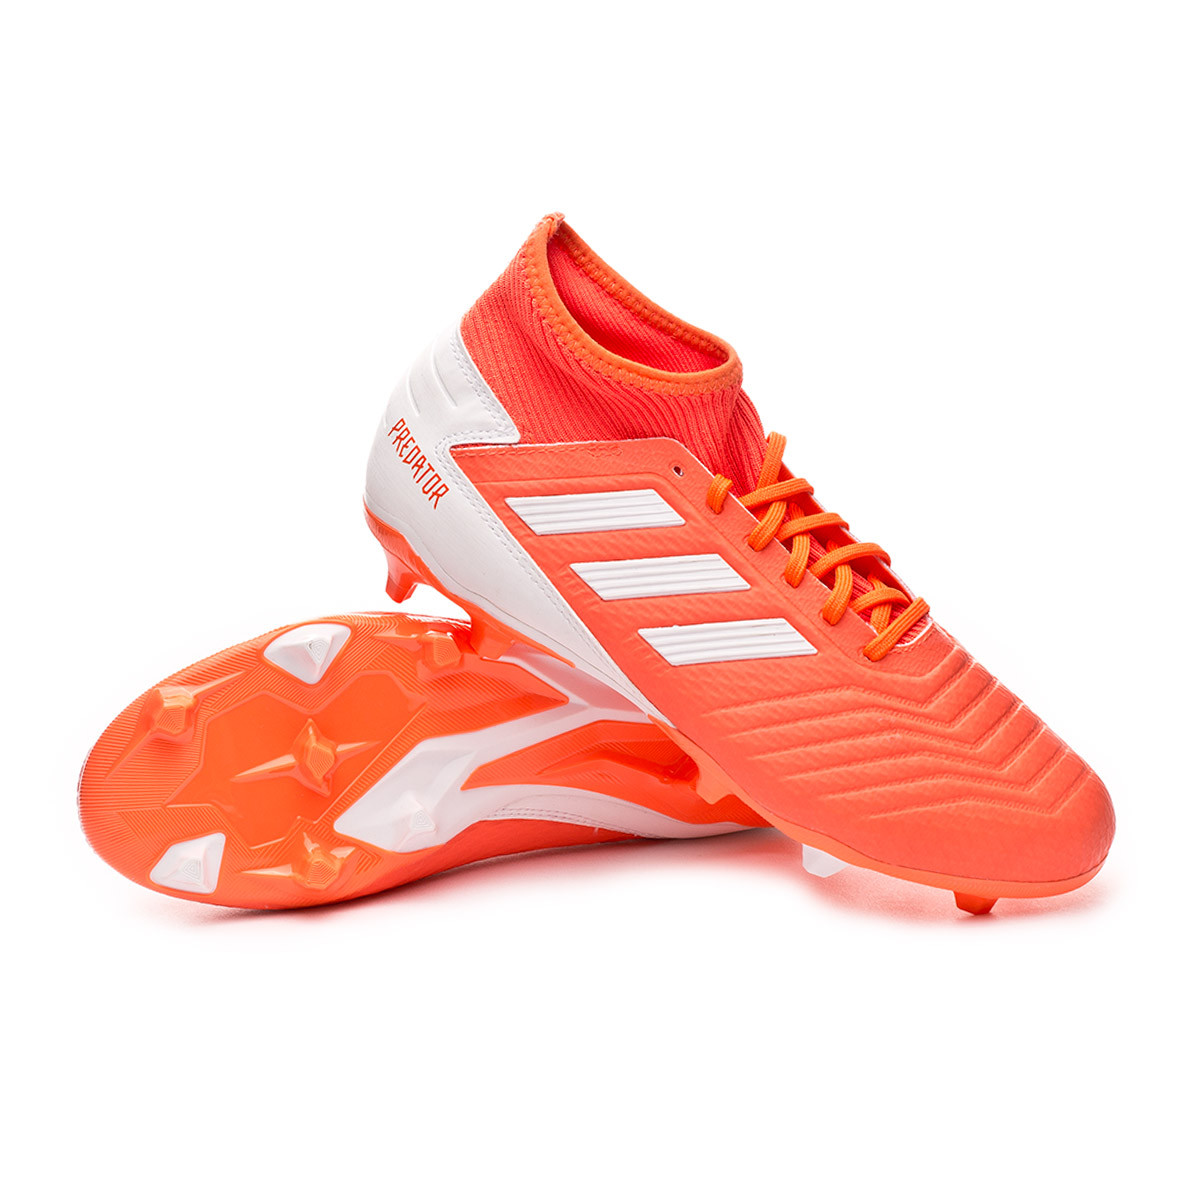 adidas predator orange and white